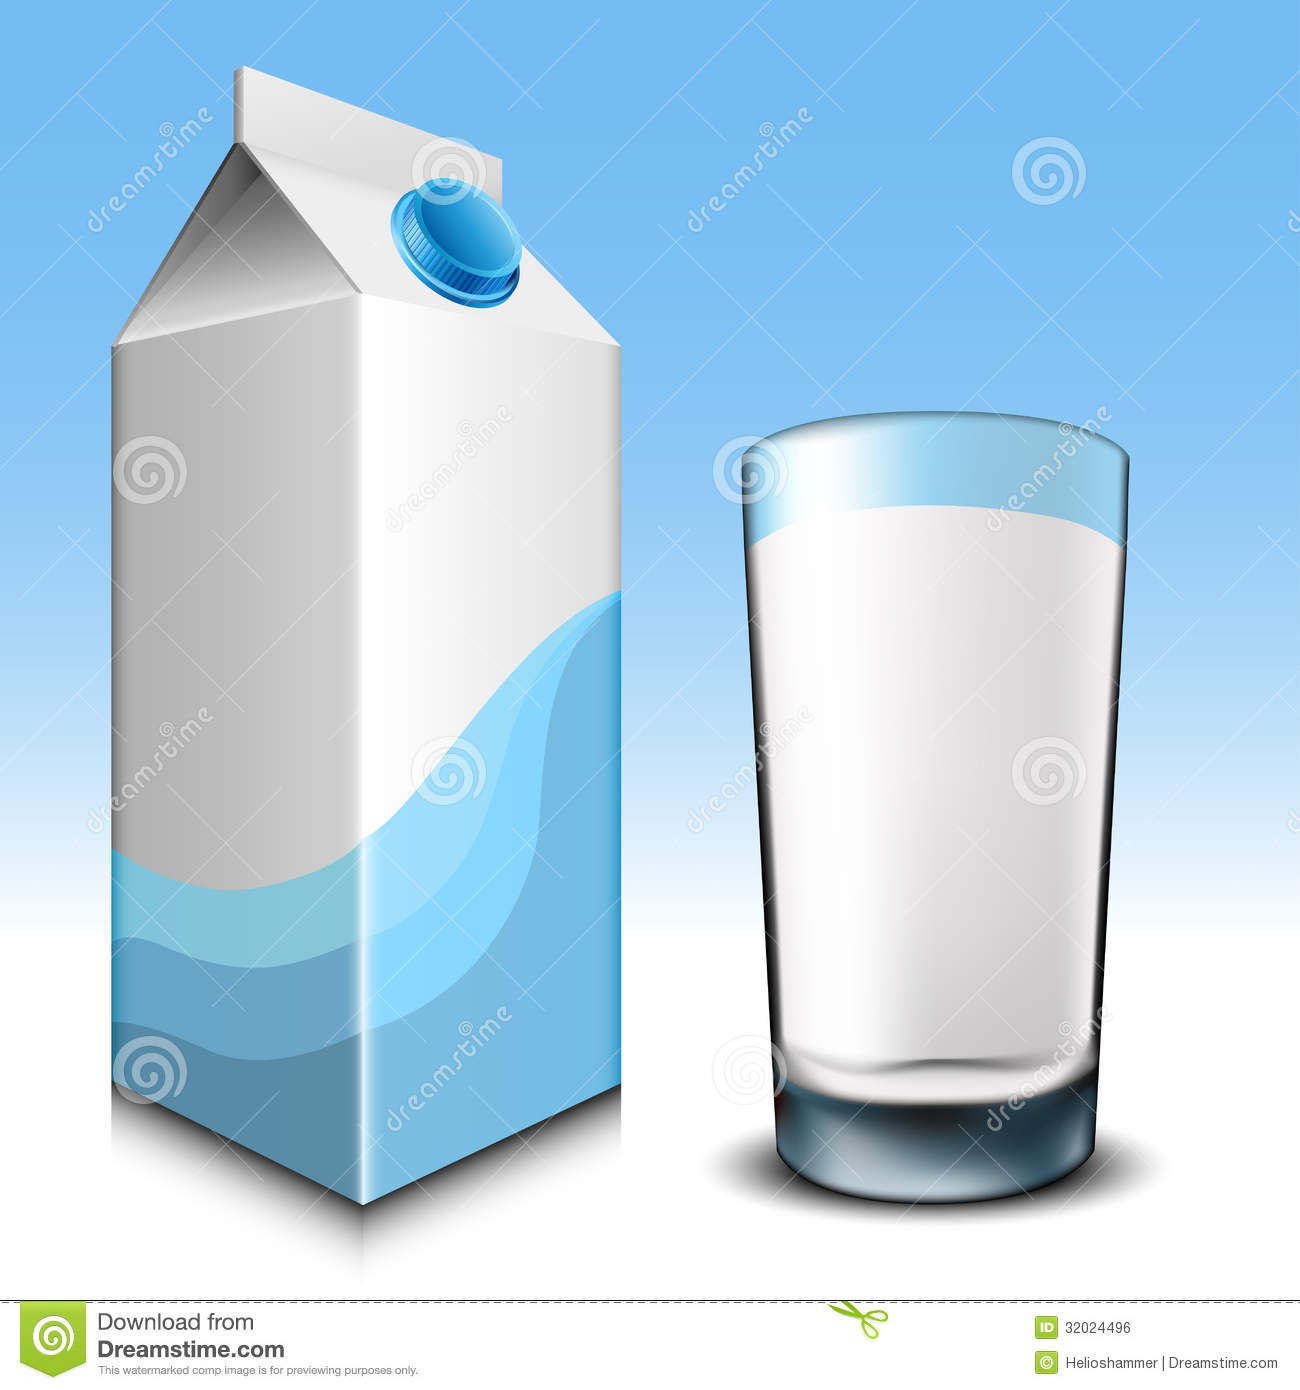 Milk Carton With Glass Royalty Free Stock Image   Image  32024496